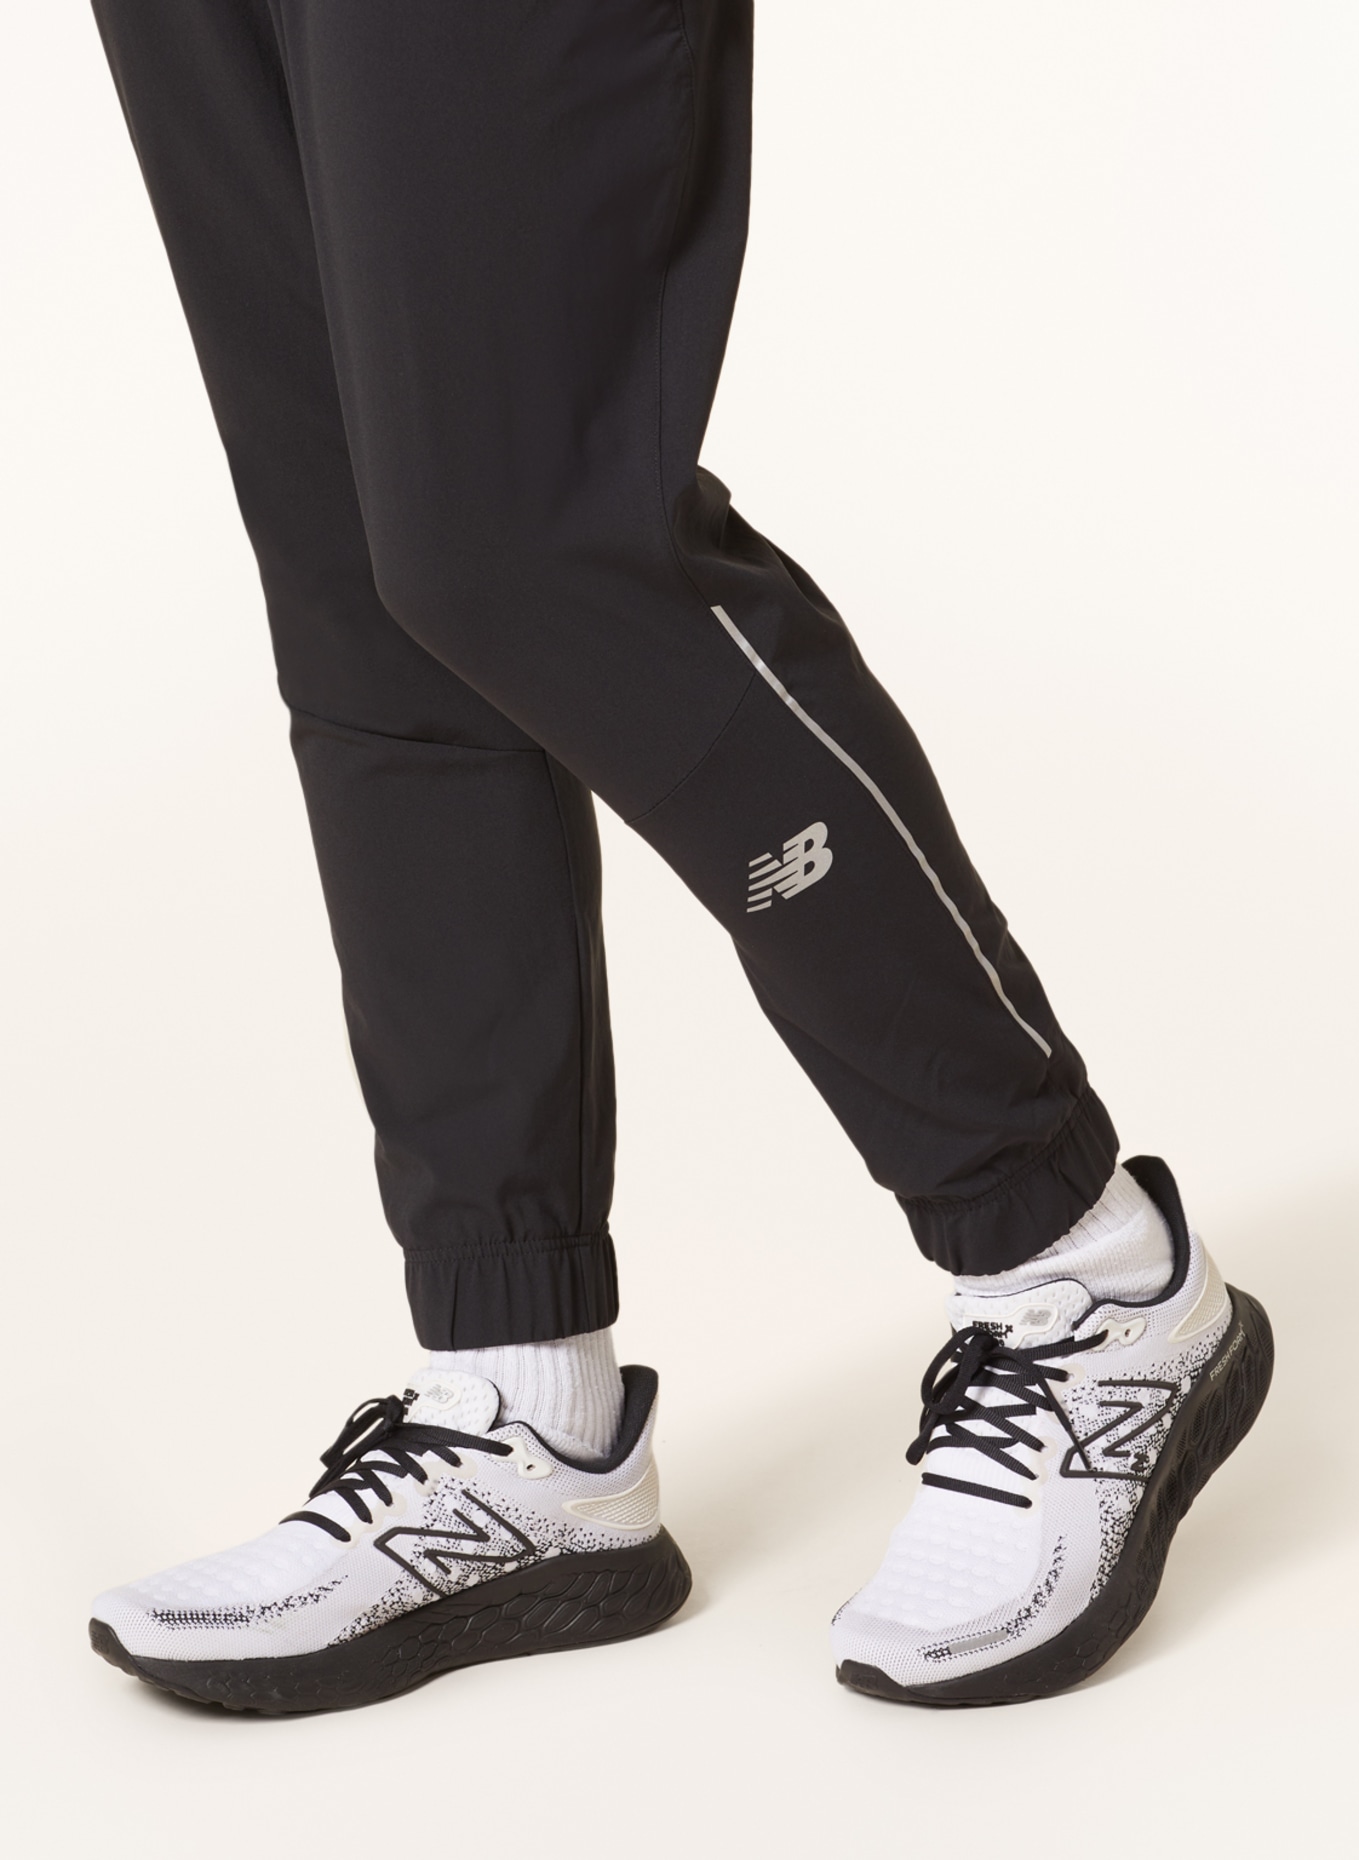 New Balance | Core Woven Jogging Pants Mens | Black | SportsDirect.com